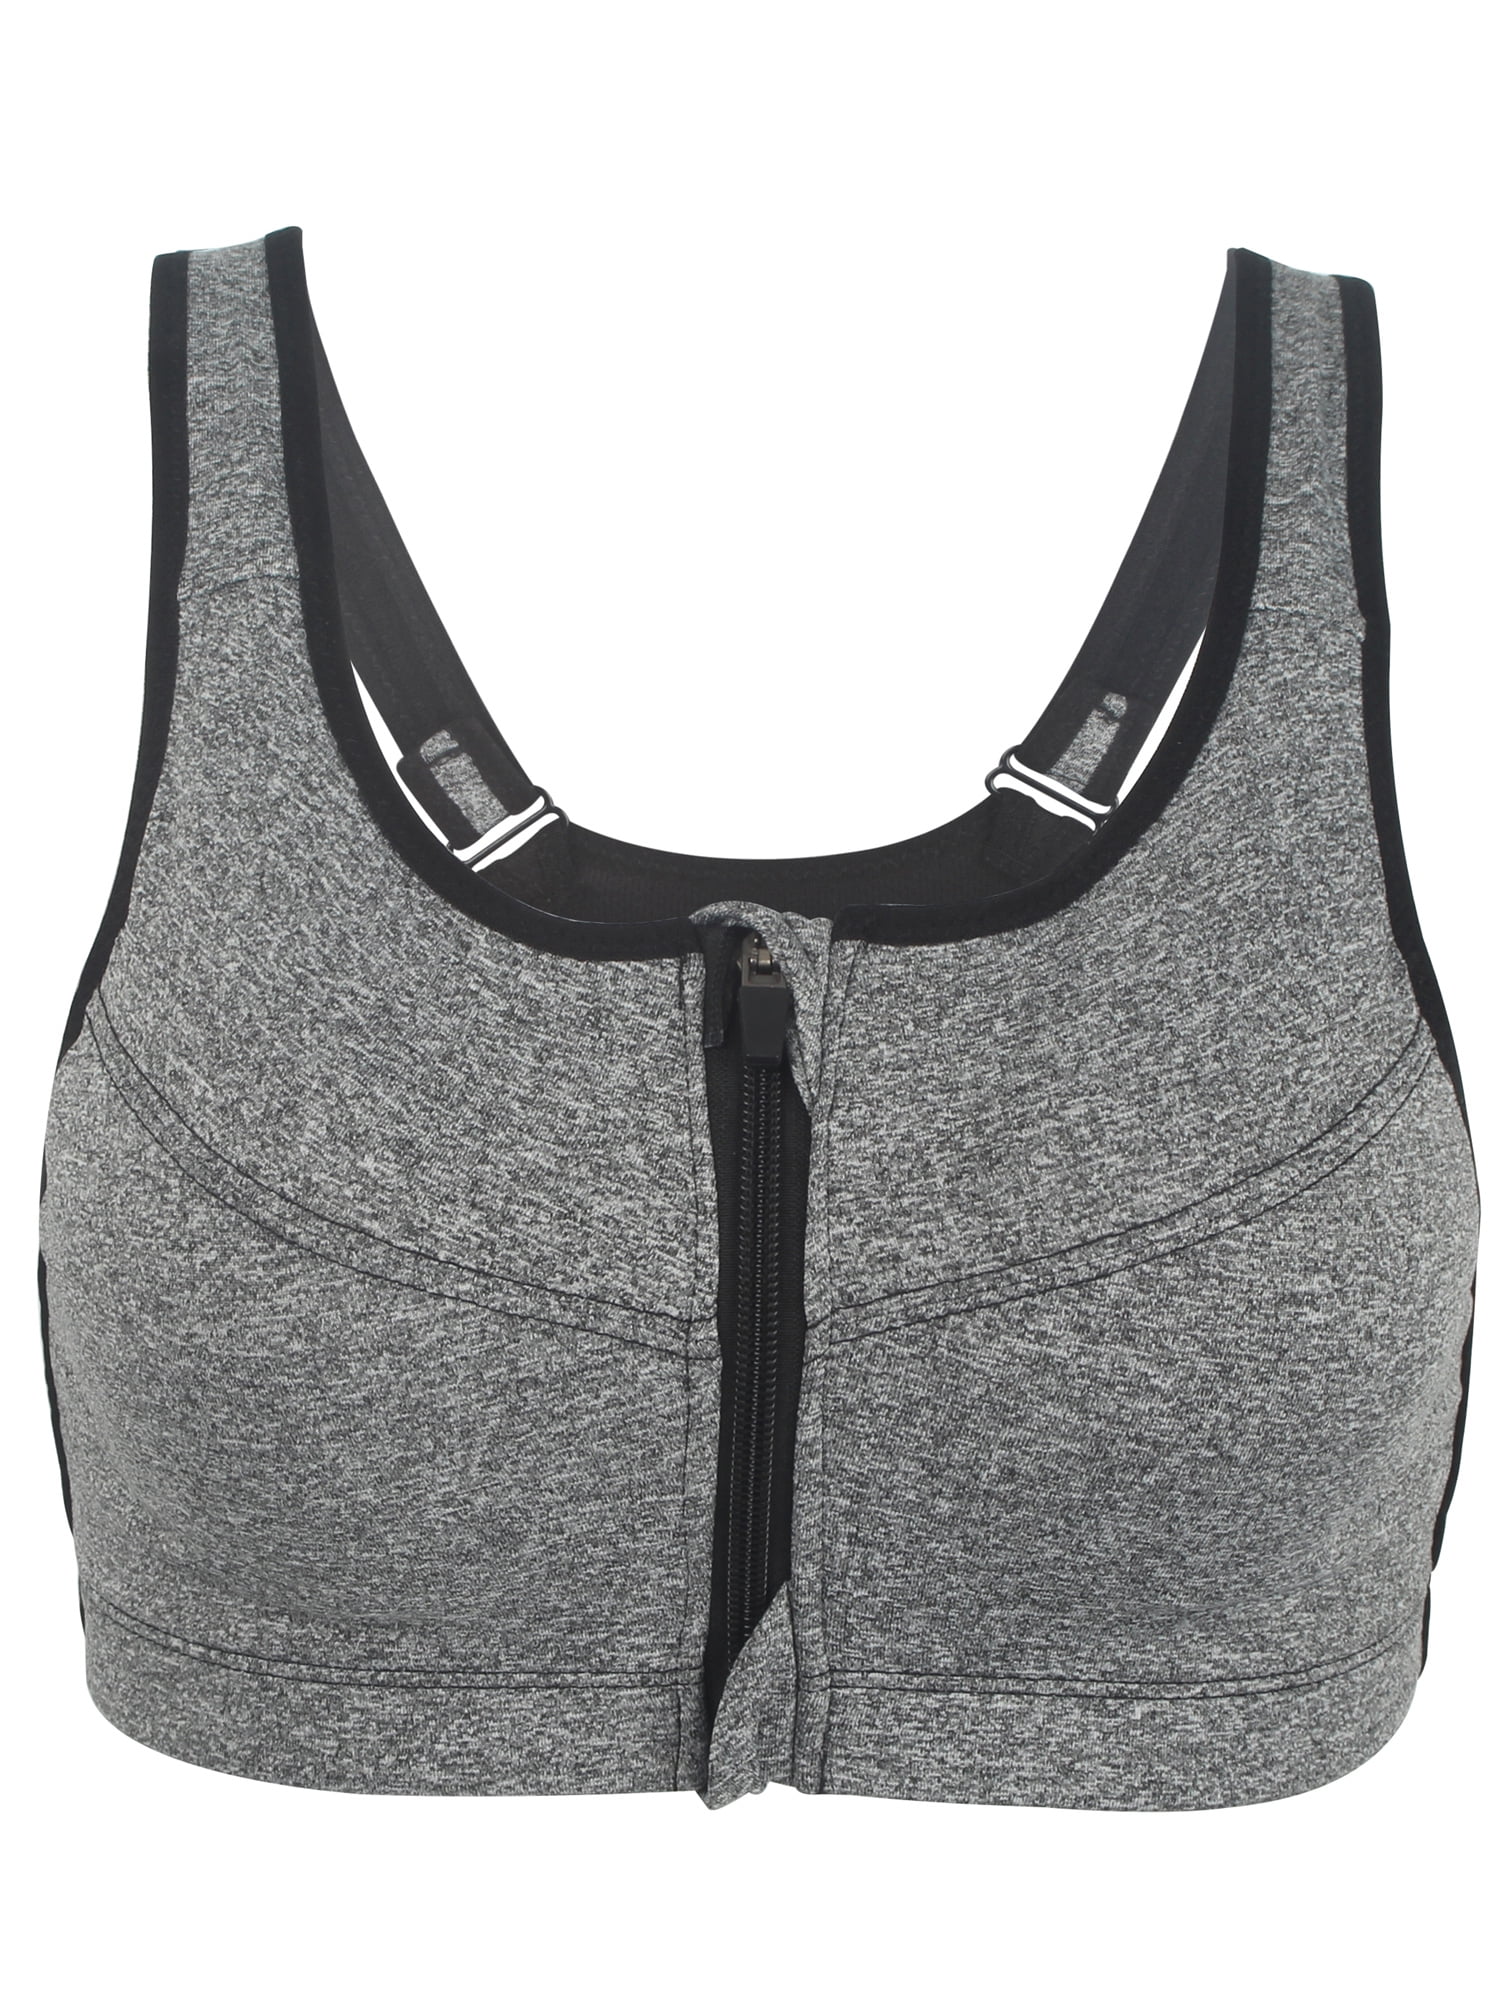 DODOING Women's Push Up Zipper Front Closure Padded Bras Sports Bra High  Impact Fitness Yoga Bras M-2XL 